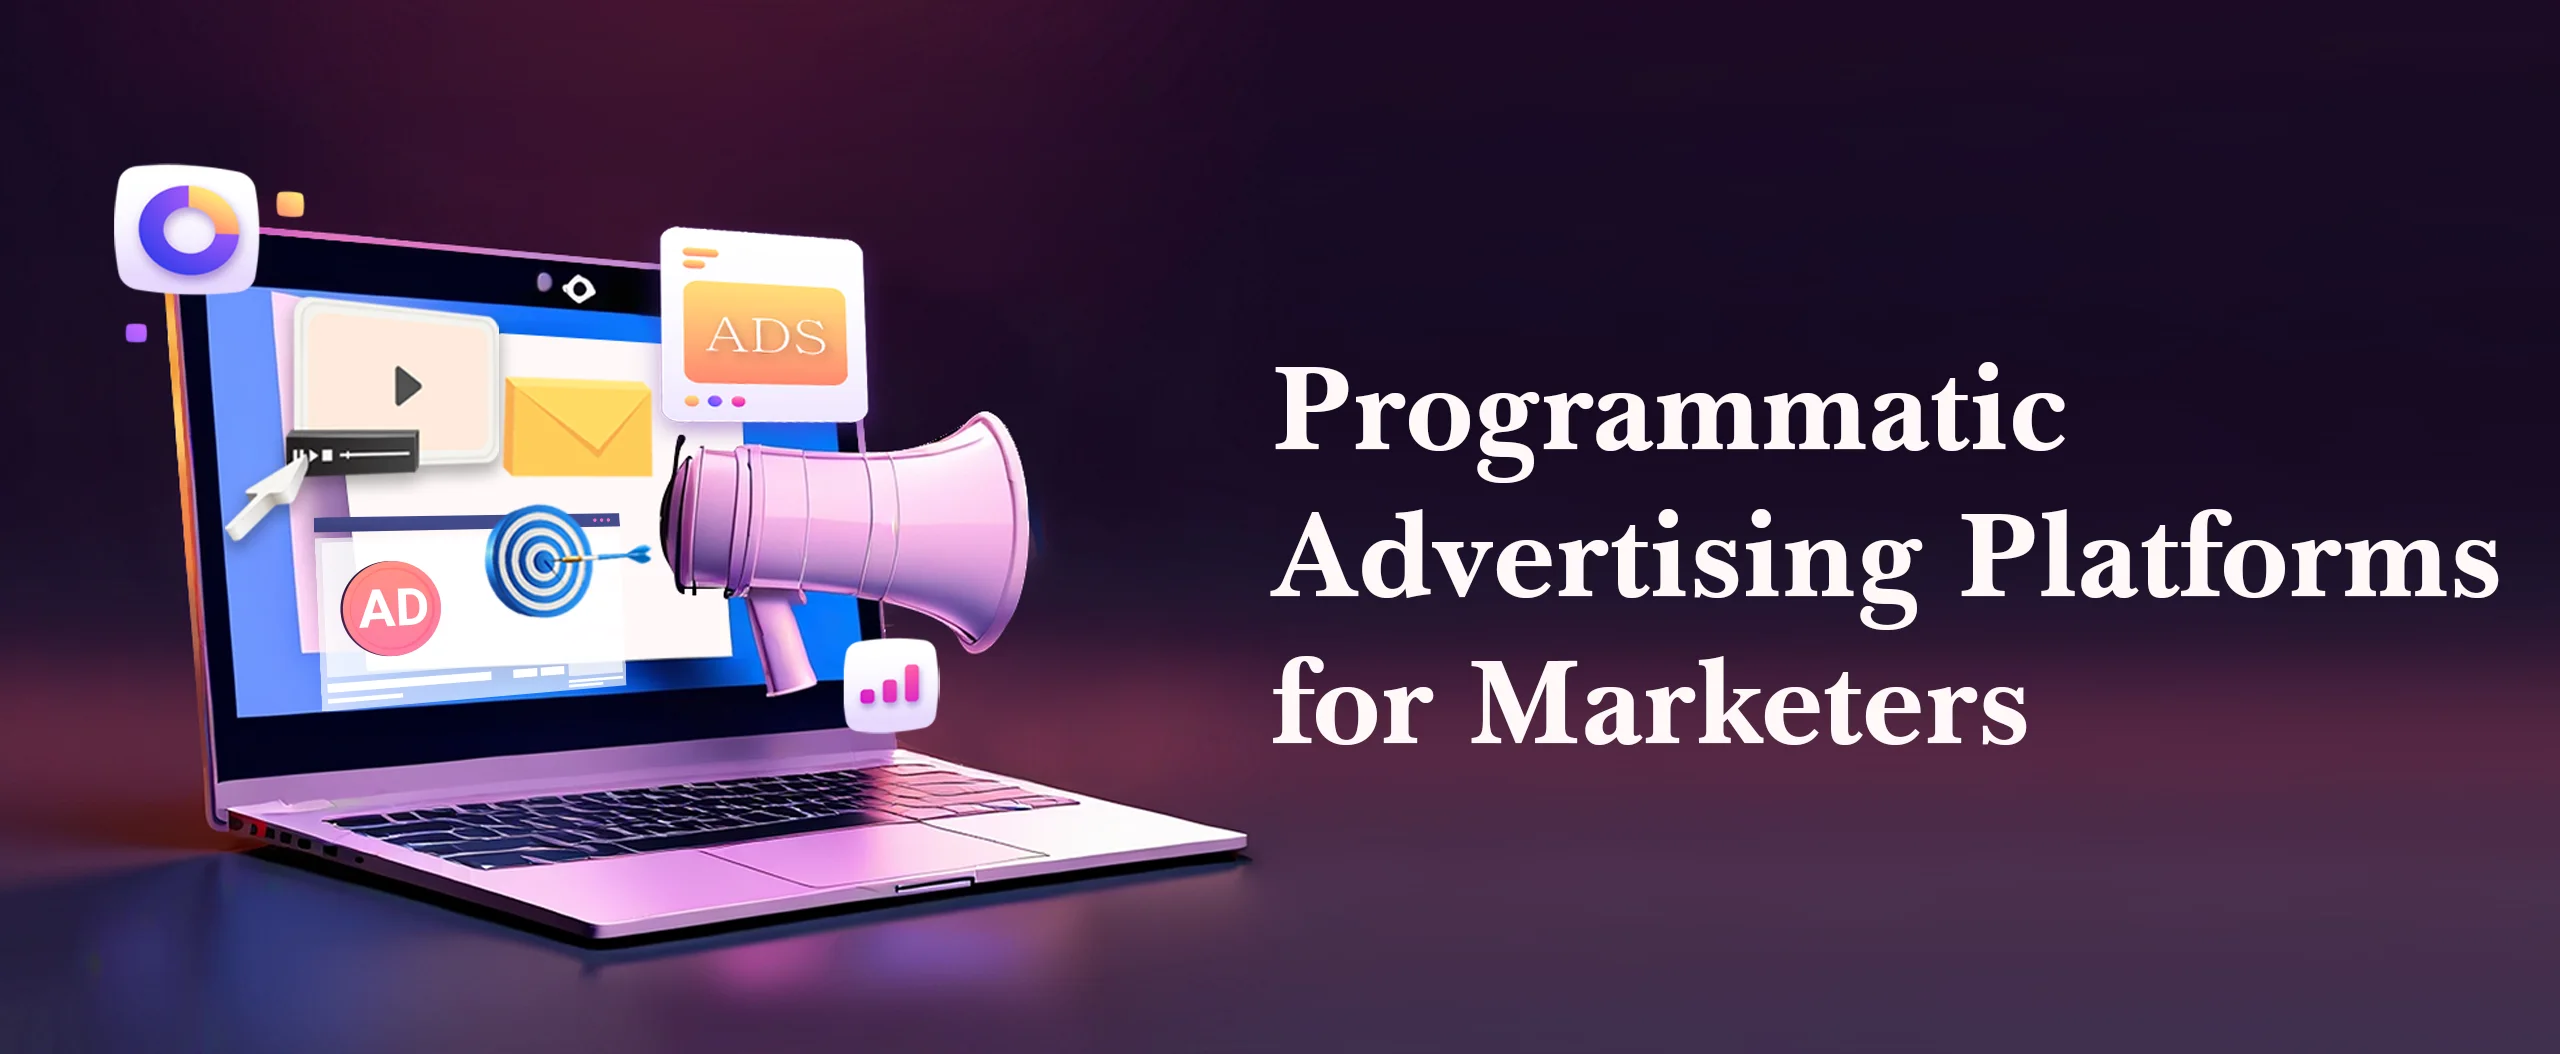 Programmatic-Advertising-Platforms